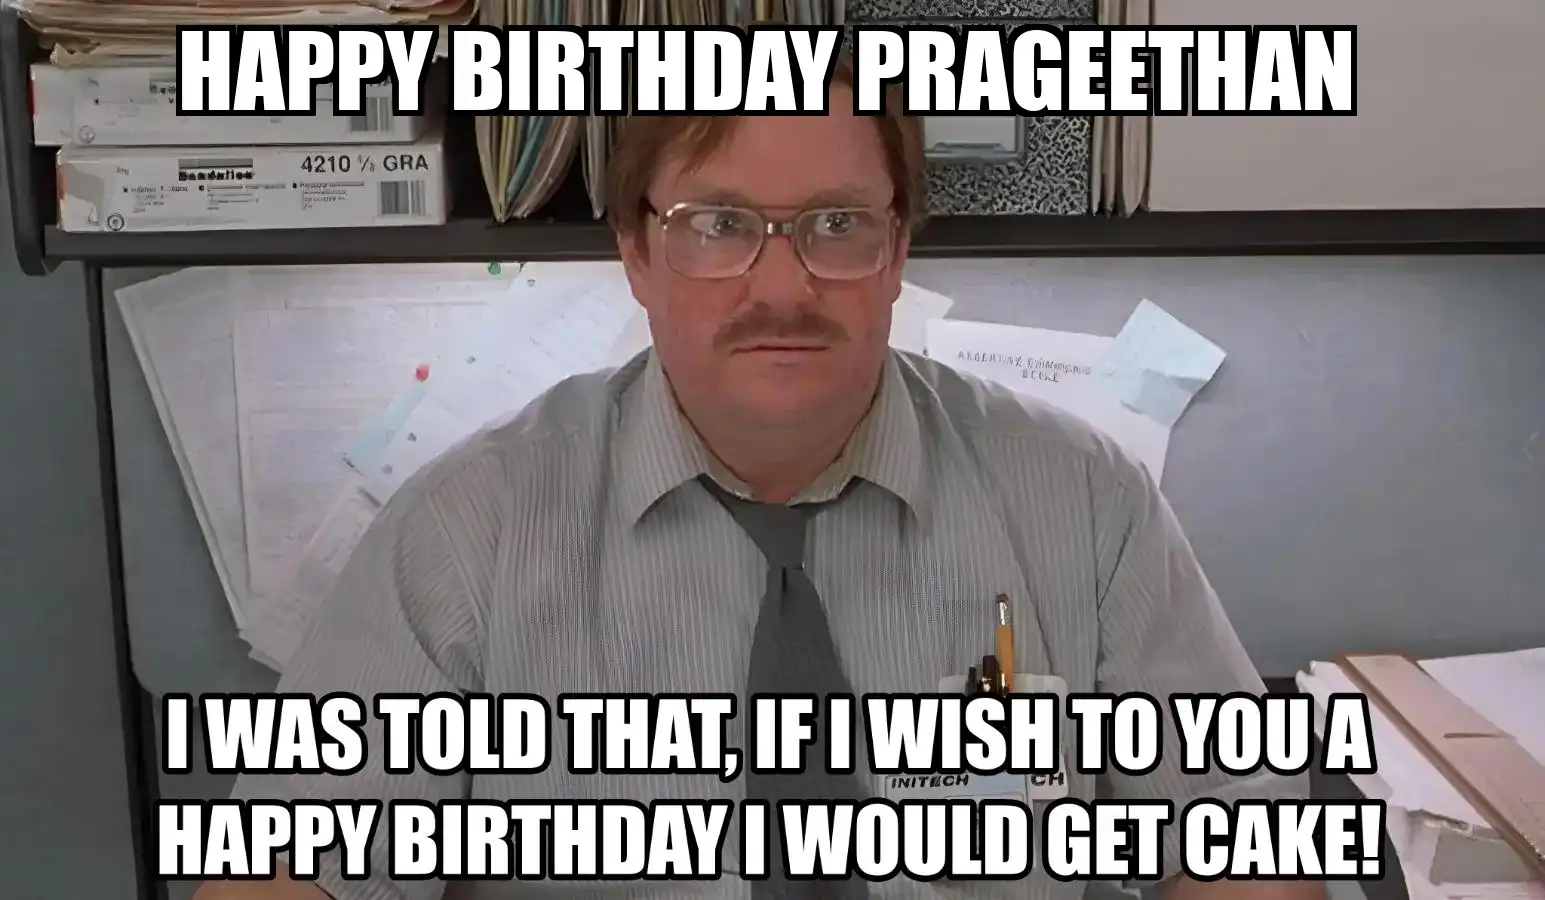 Happy Birthday Prageethan I Would Get A Cake Meme